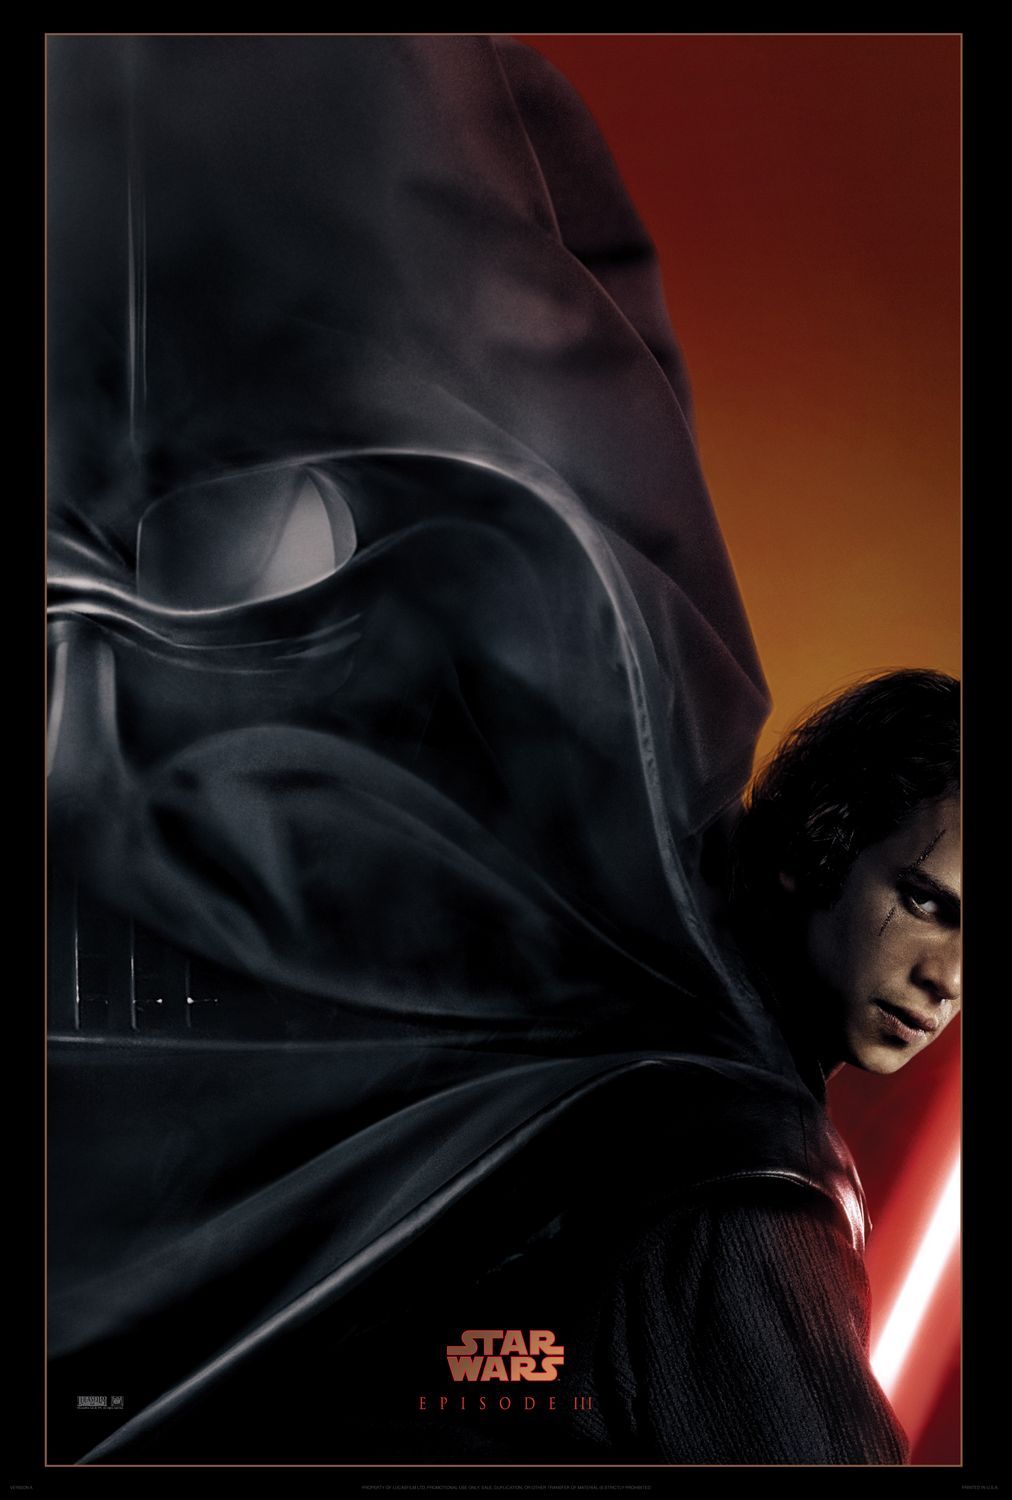 Star Wars Episode III: Revenge of the Sith Teaser - Return of Darth Vader |  Star wars movies posters, Star wars movie, Star wars watch